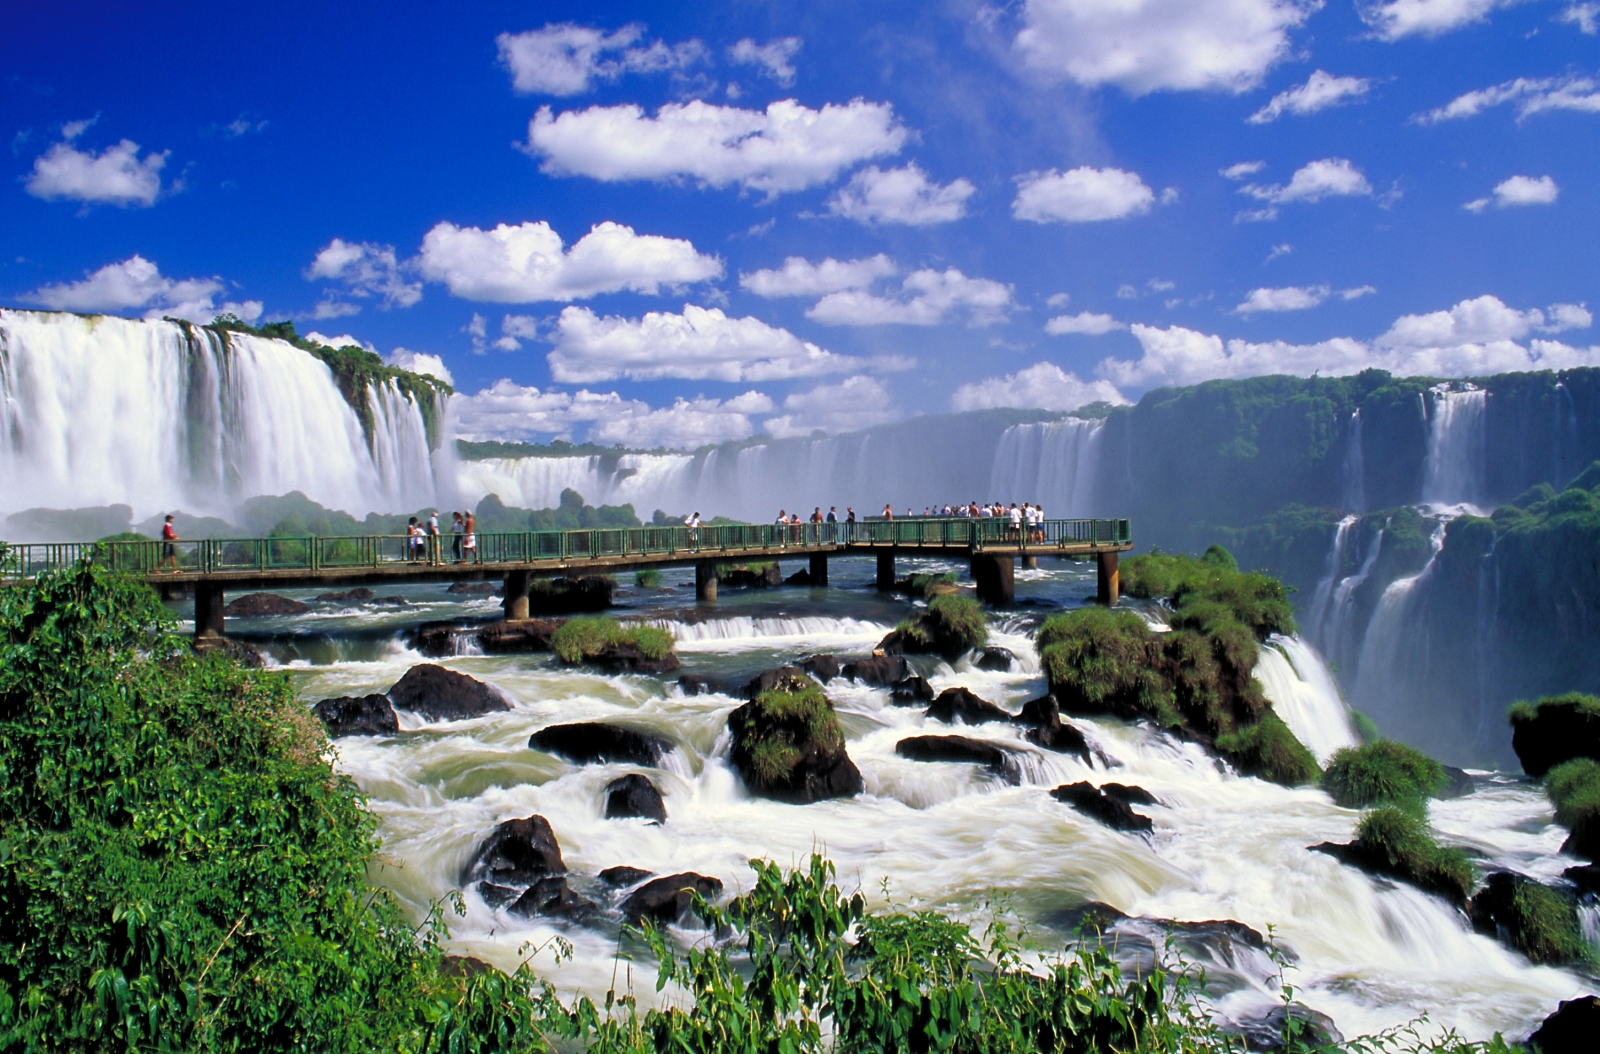 The Iguassa falls, Brazil